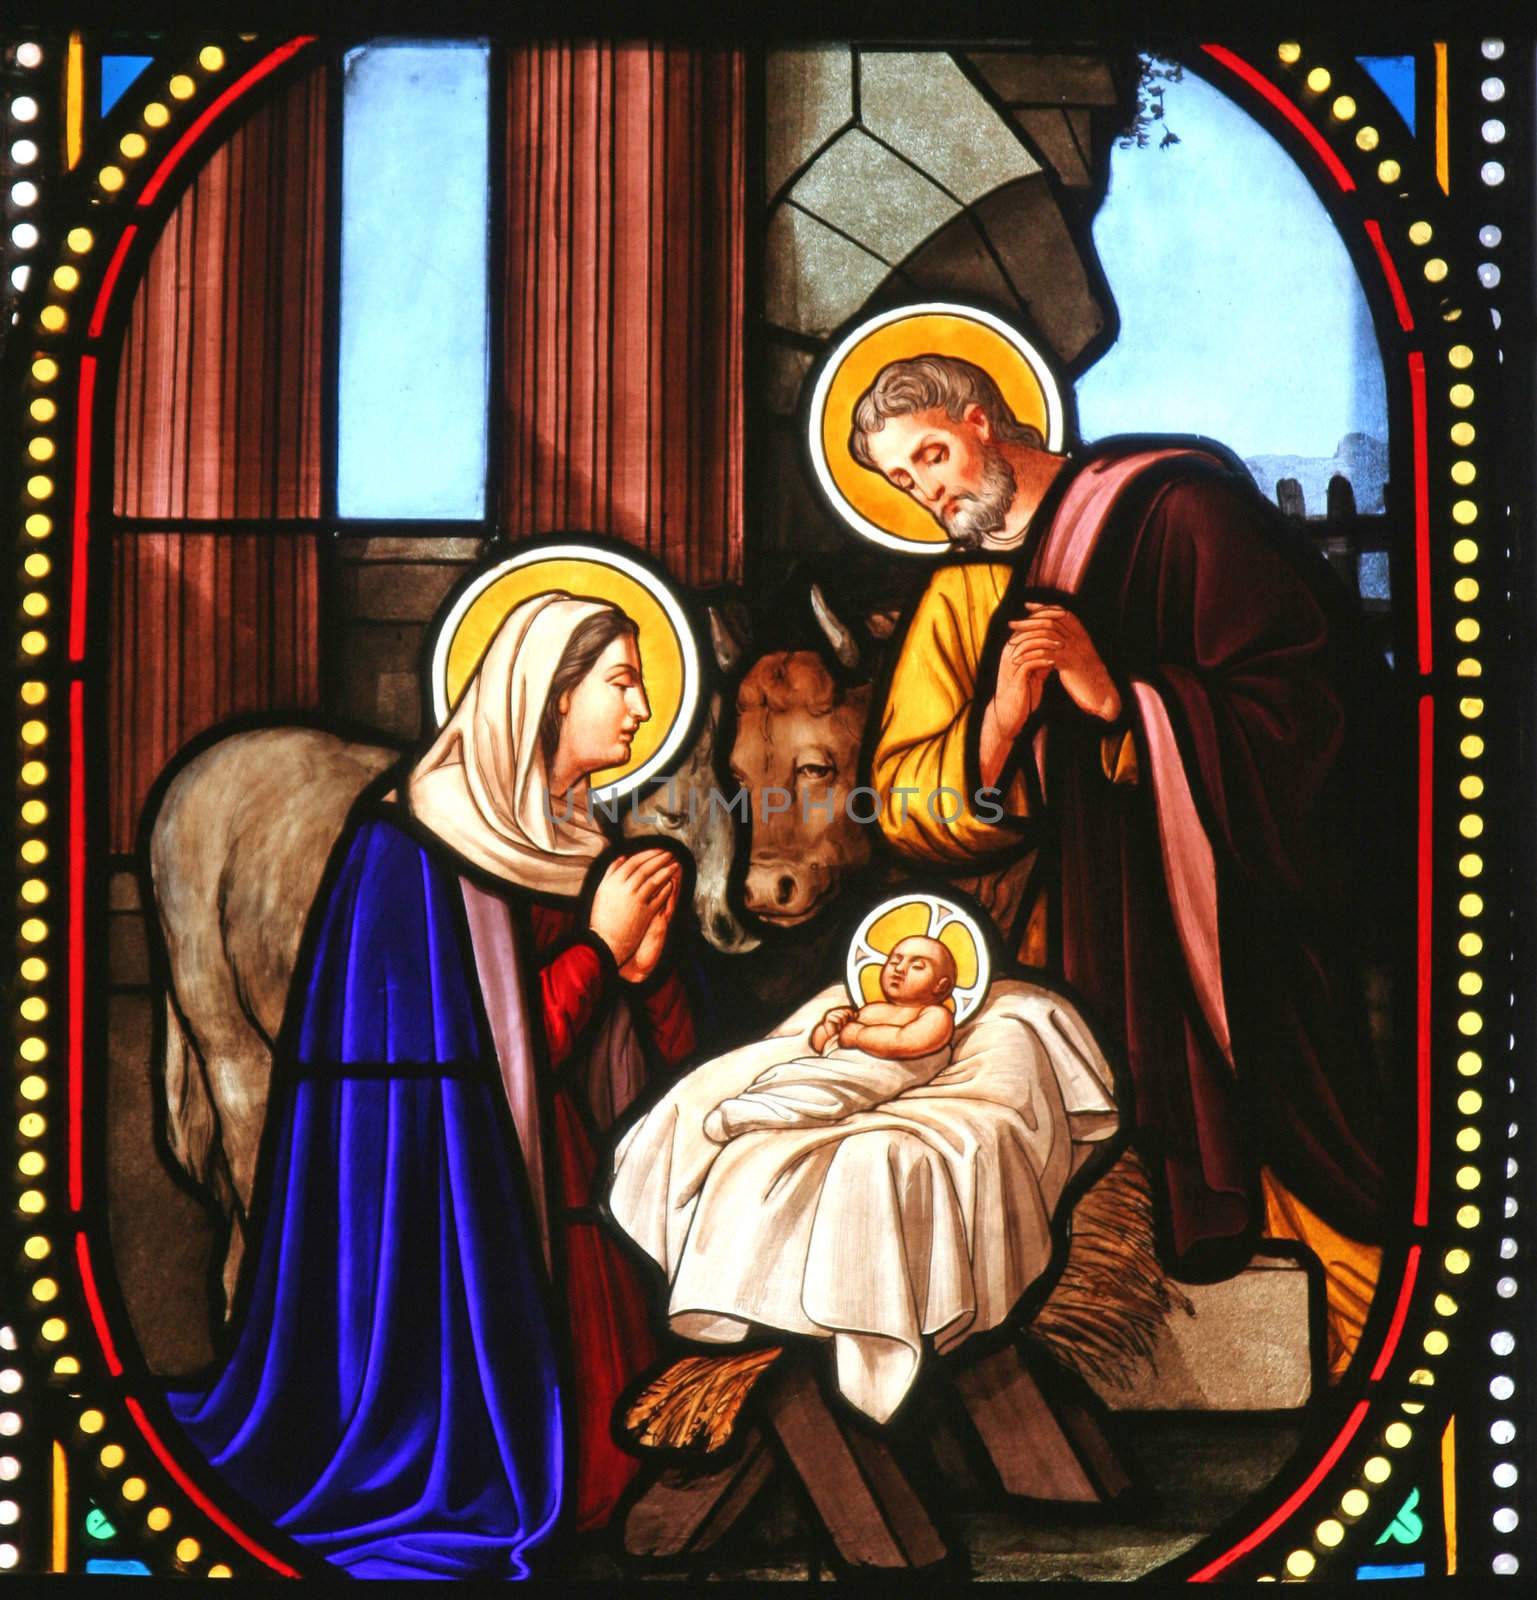 Nativity scene, stained glass, Church of St. Catherine, Bethlehem